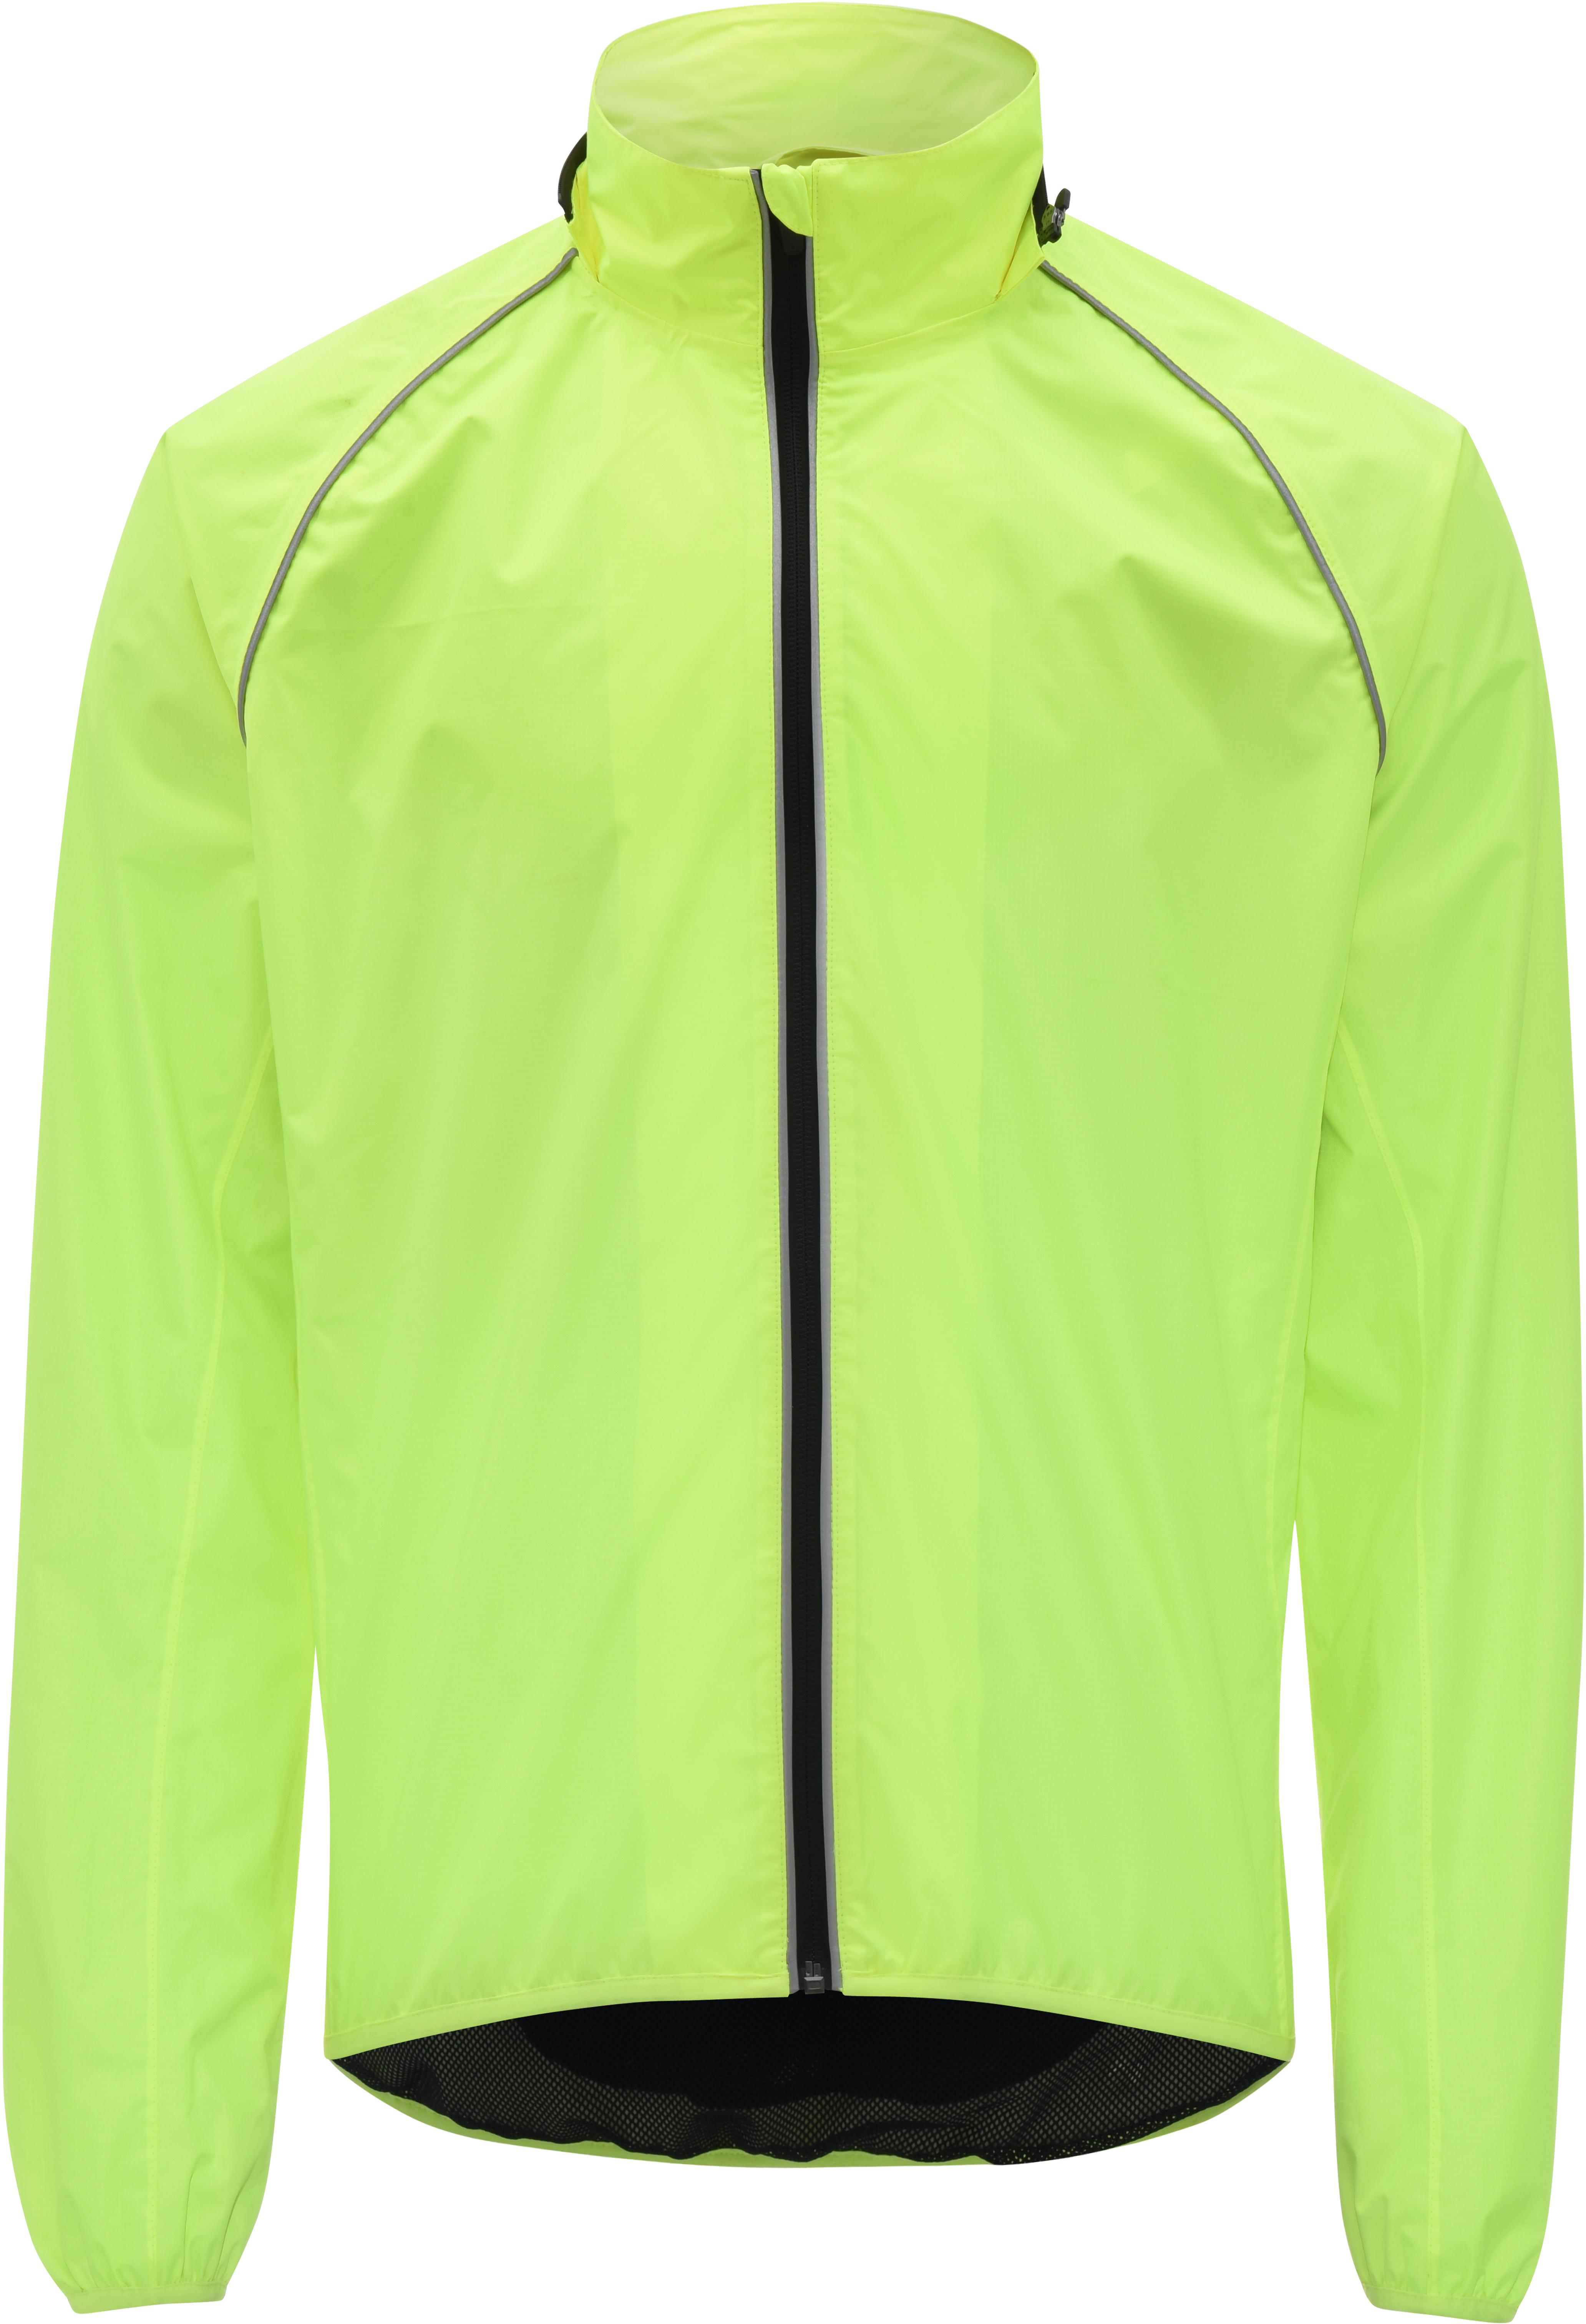 Ridge Unisex Waterproof Jacket - Fluorescent Yellow, S